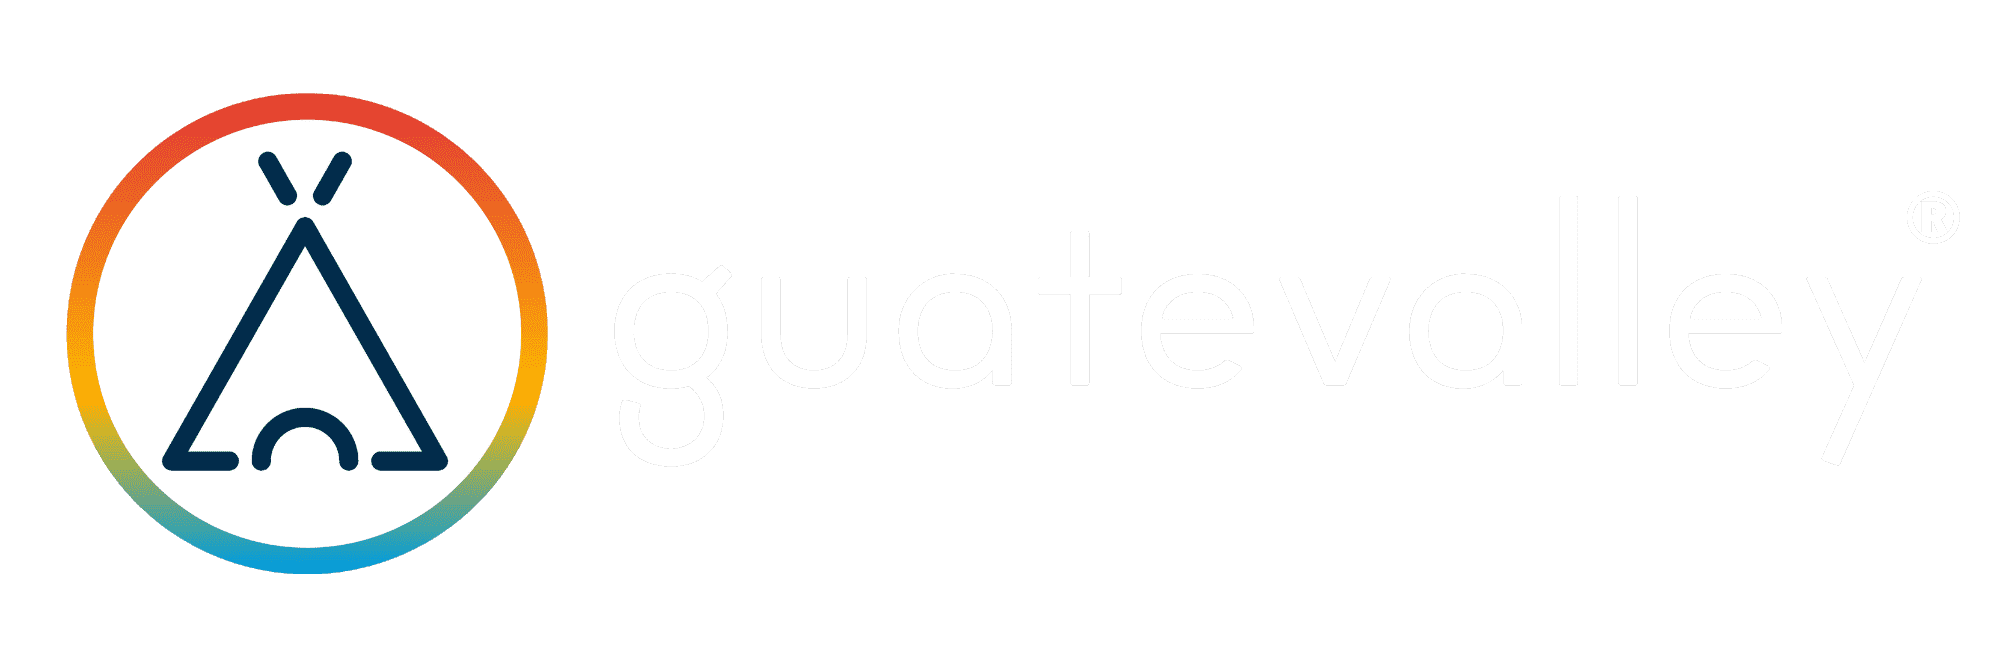 GuateValley